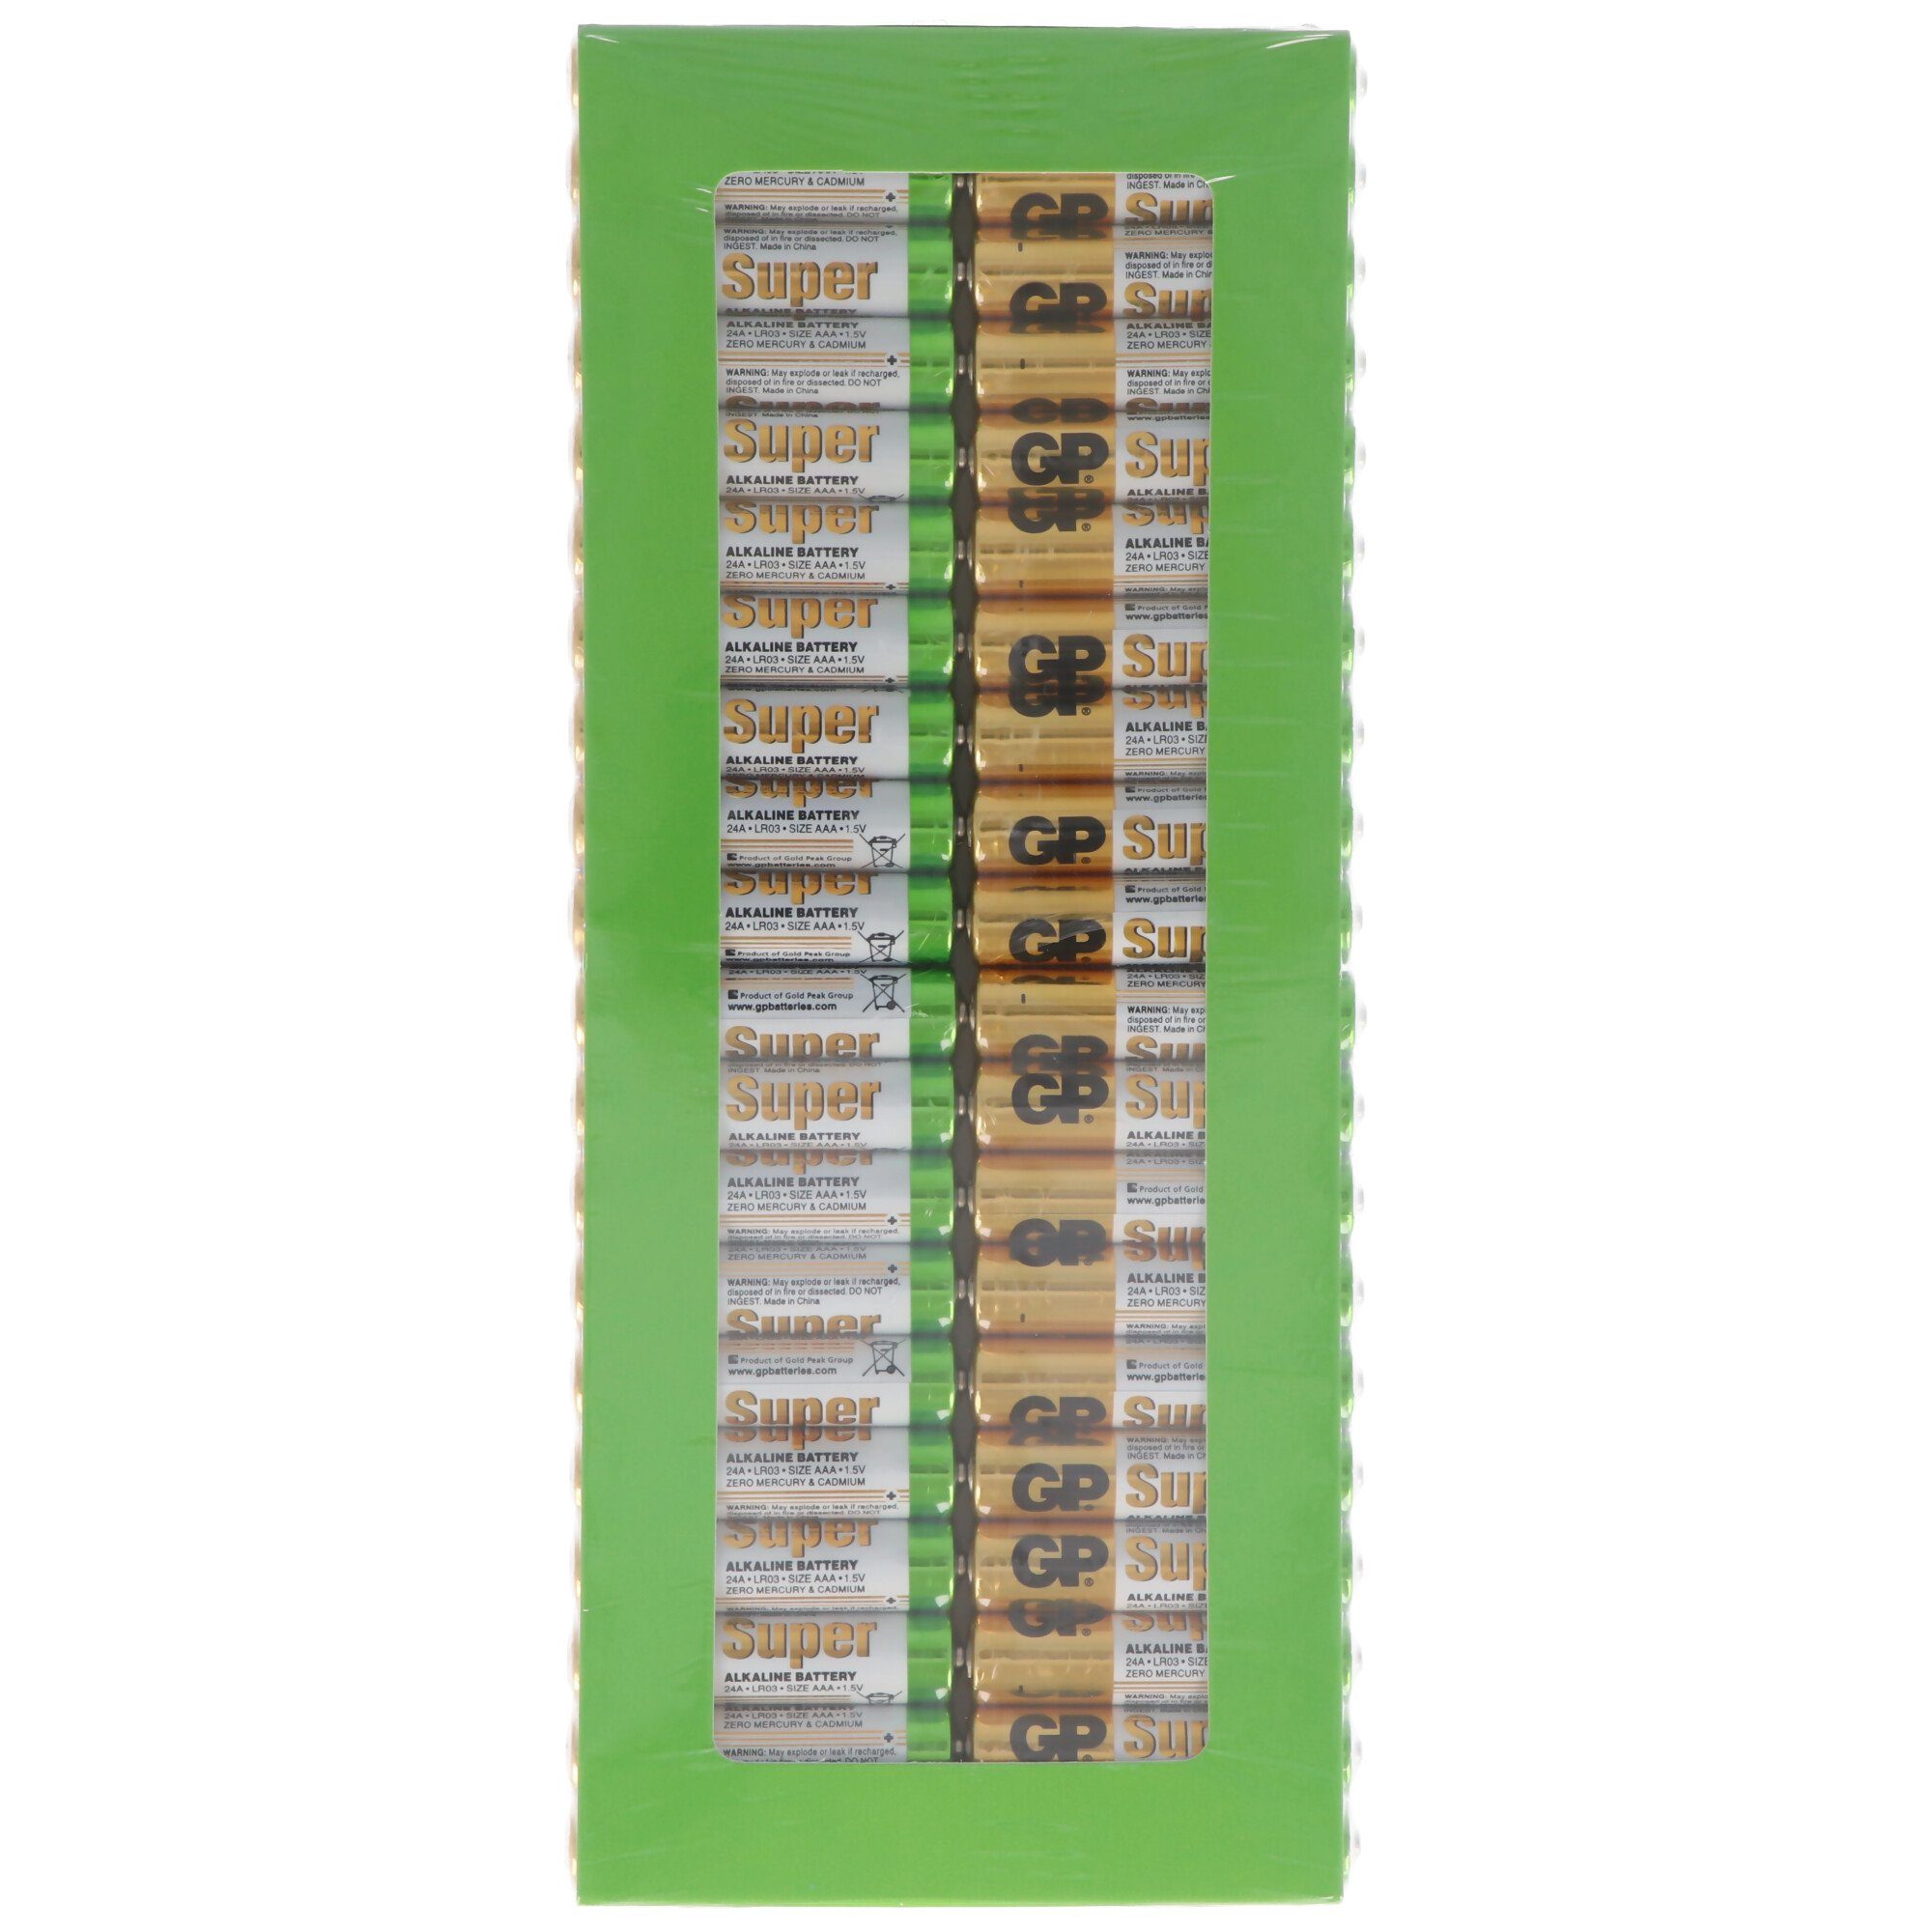 GP Super Stück Micro (1,5 GP Batteries V) 40 1,5V AAA Batterie, Alkaline Batterie